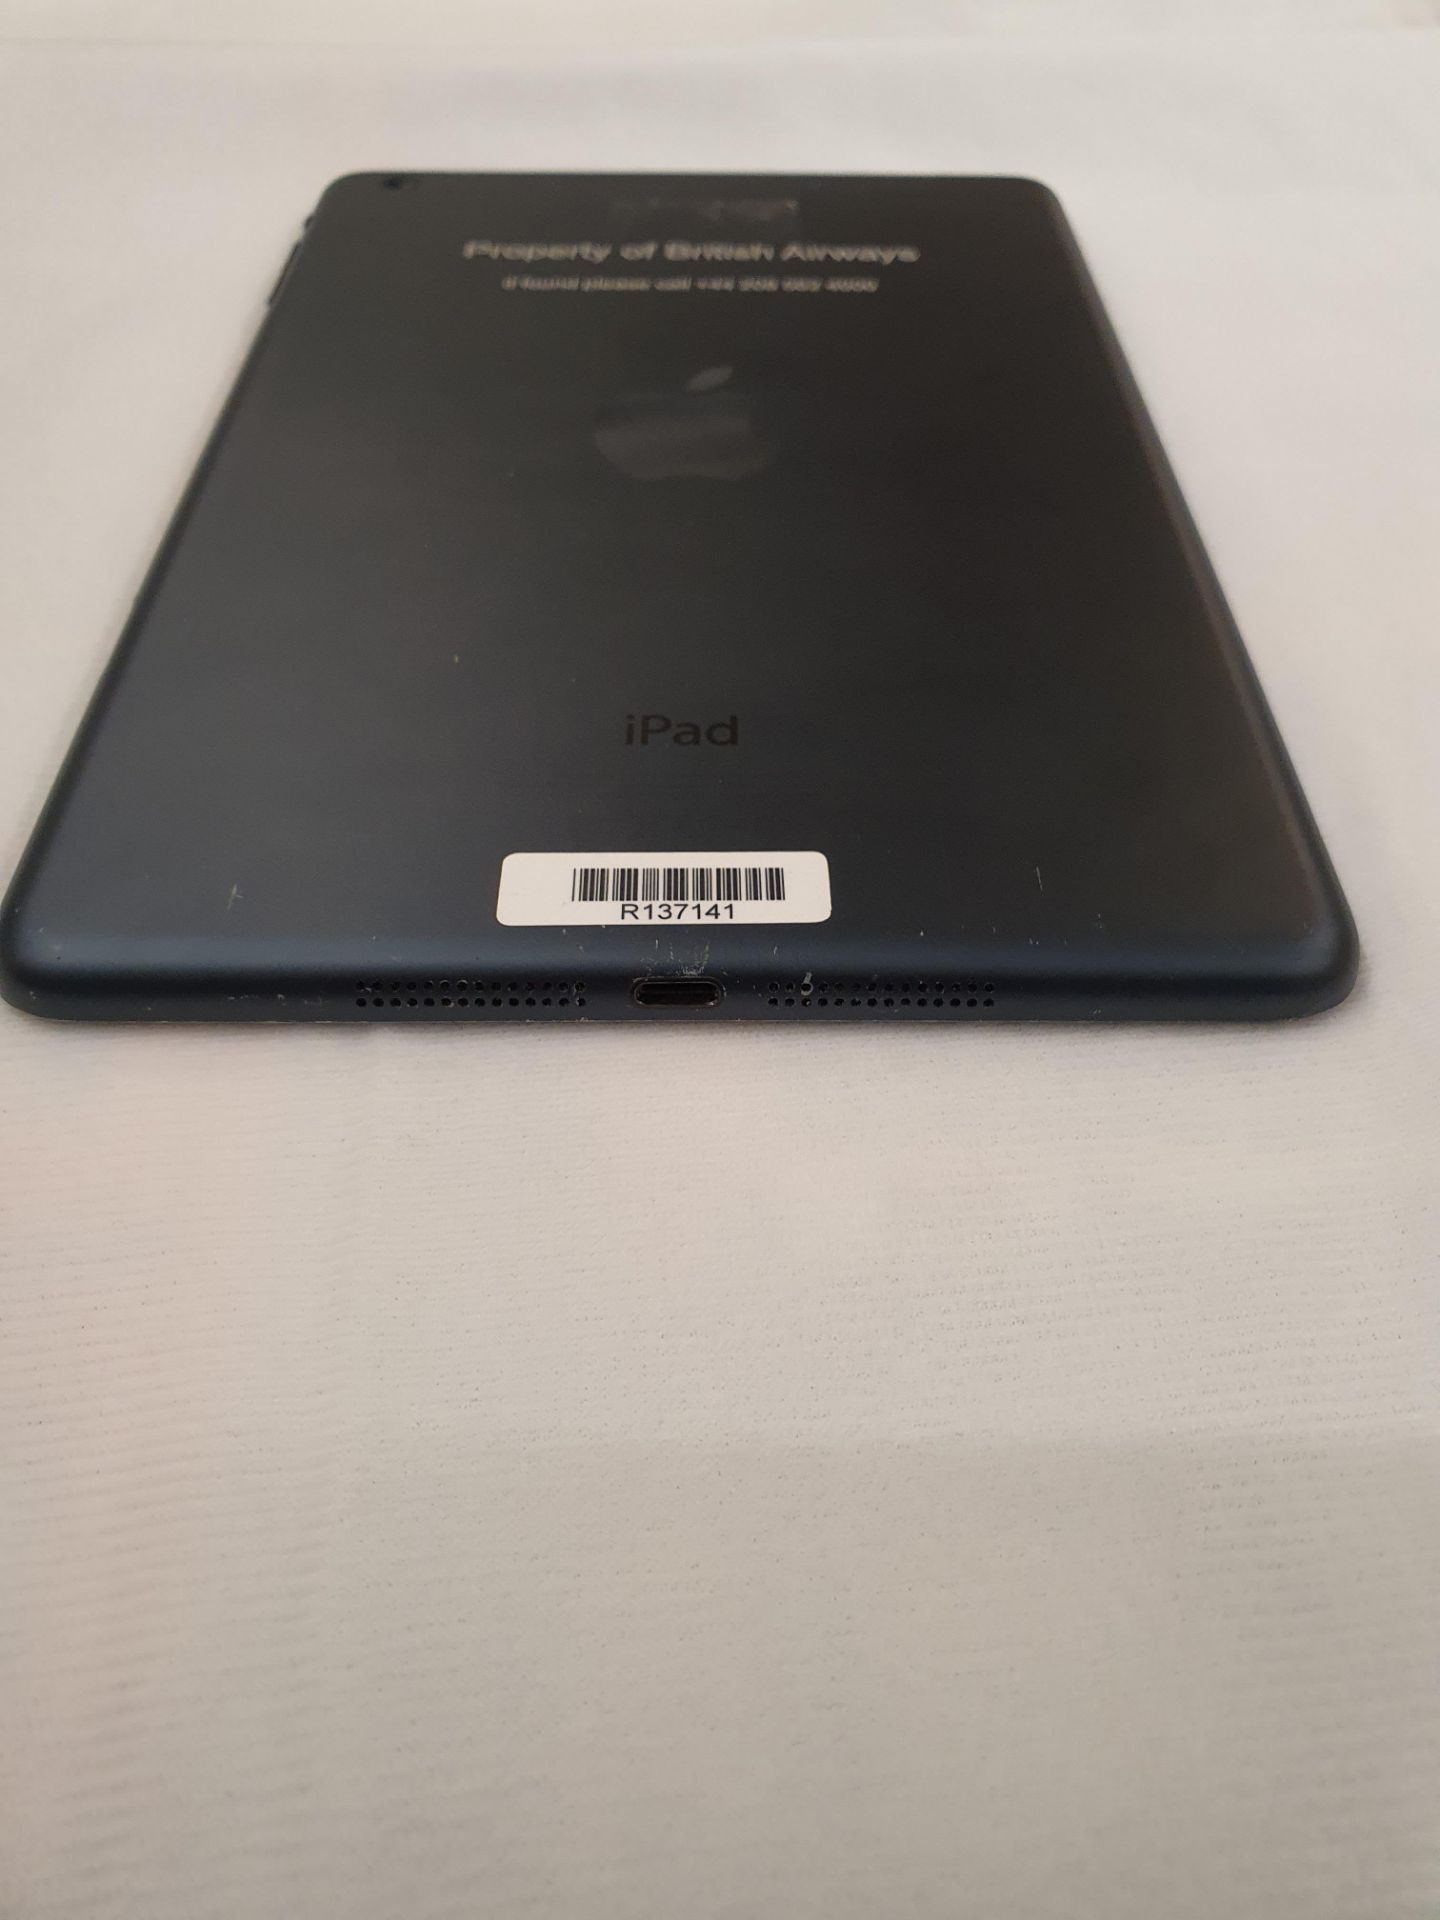 V Grade B Apple iPad Mini A1455 - Ex Lease (Has British Airways Engraving/Etching) - 16GB - Unit - Image 4 of 4